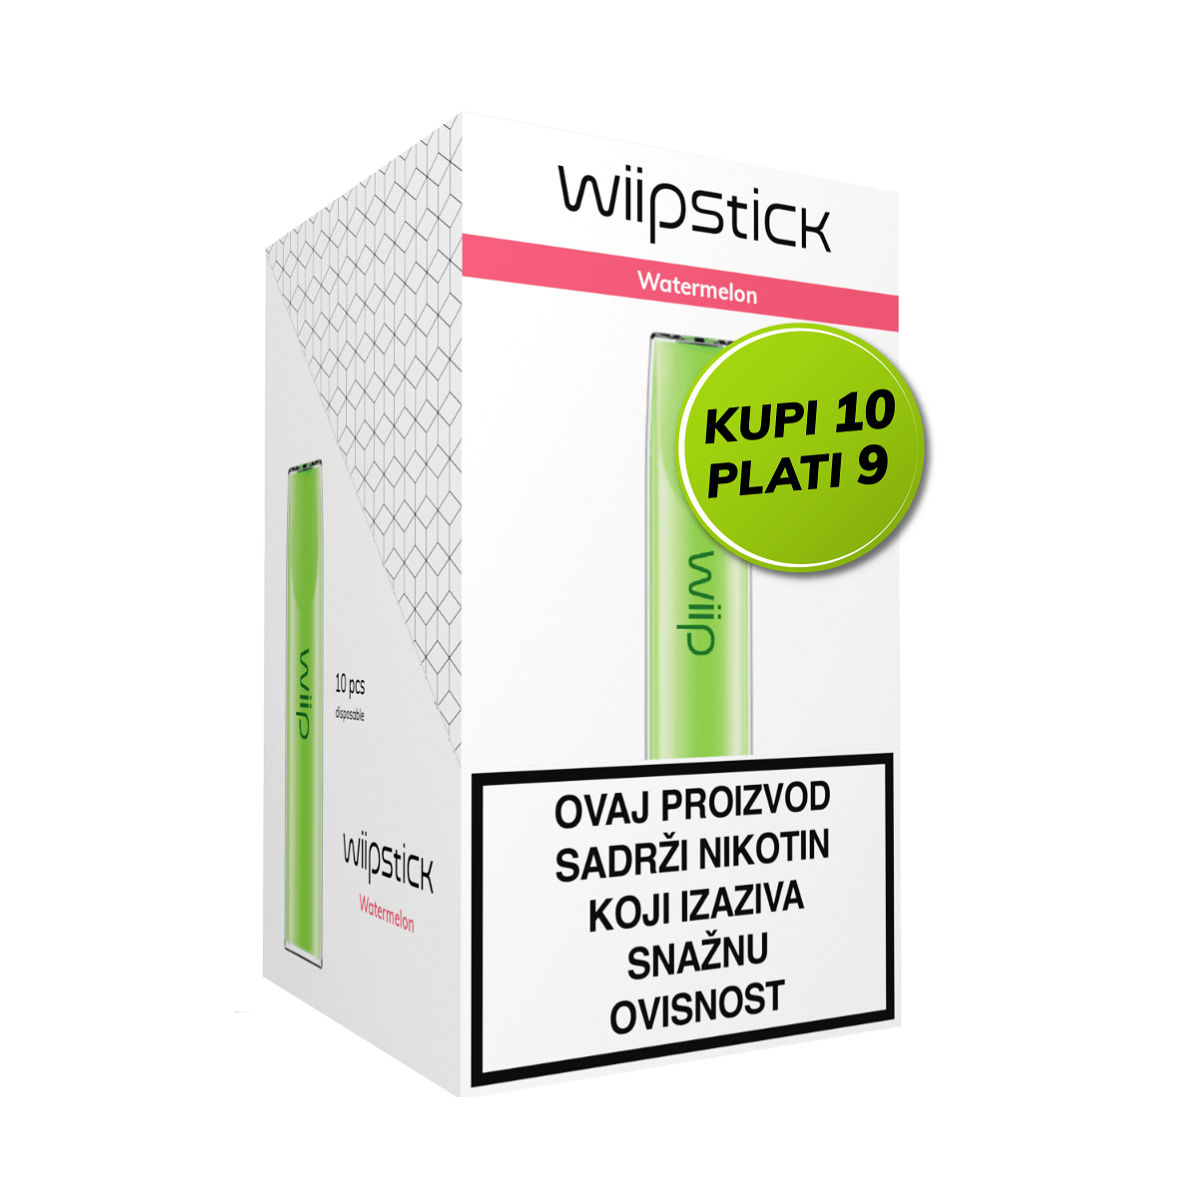 Wiipstick multipack 10/1, Watermelon